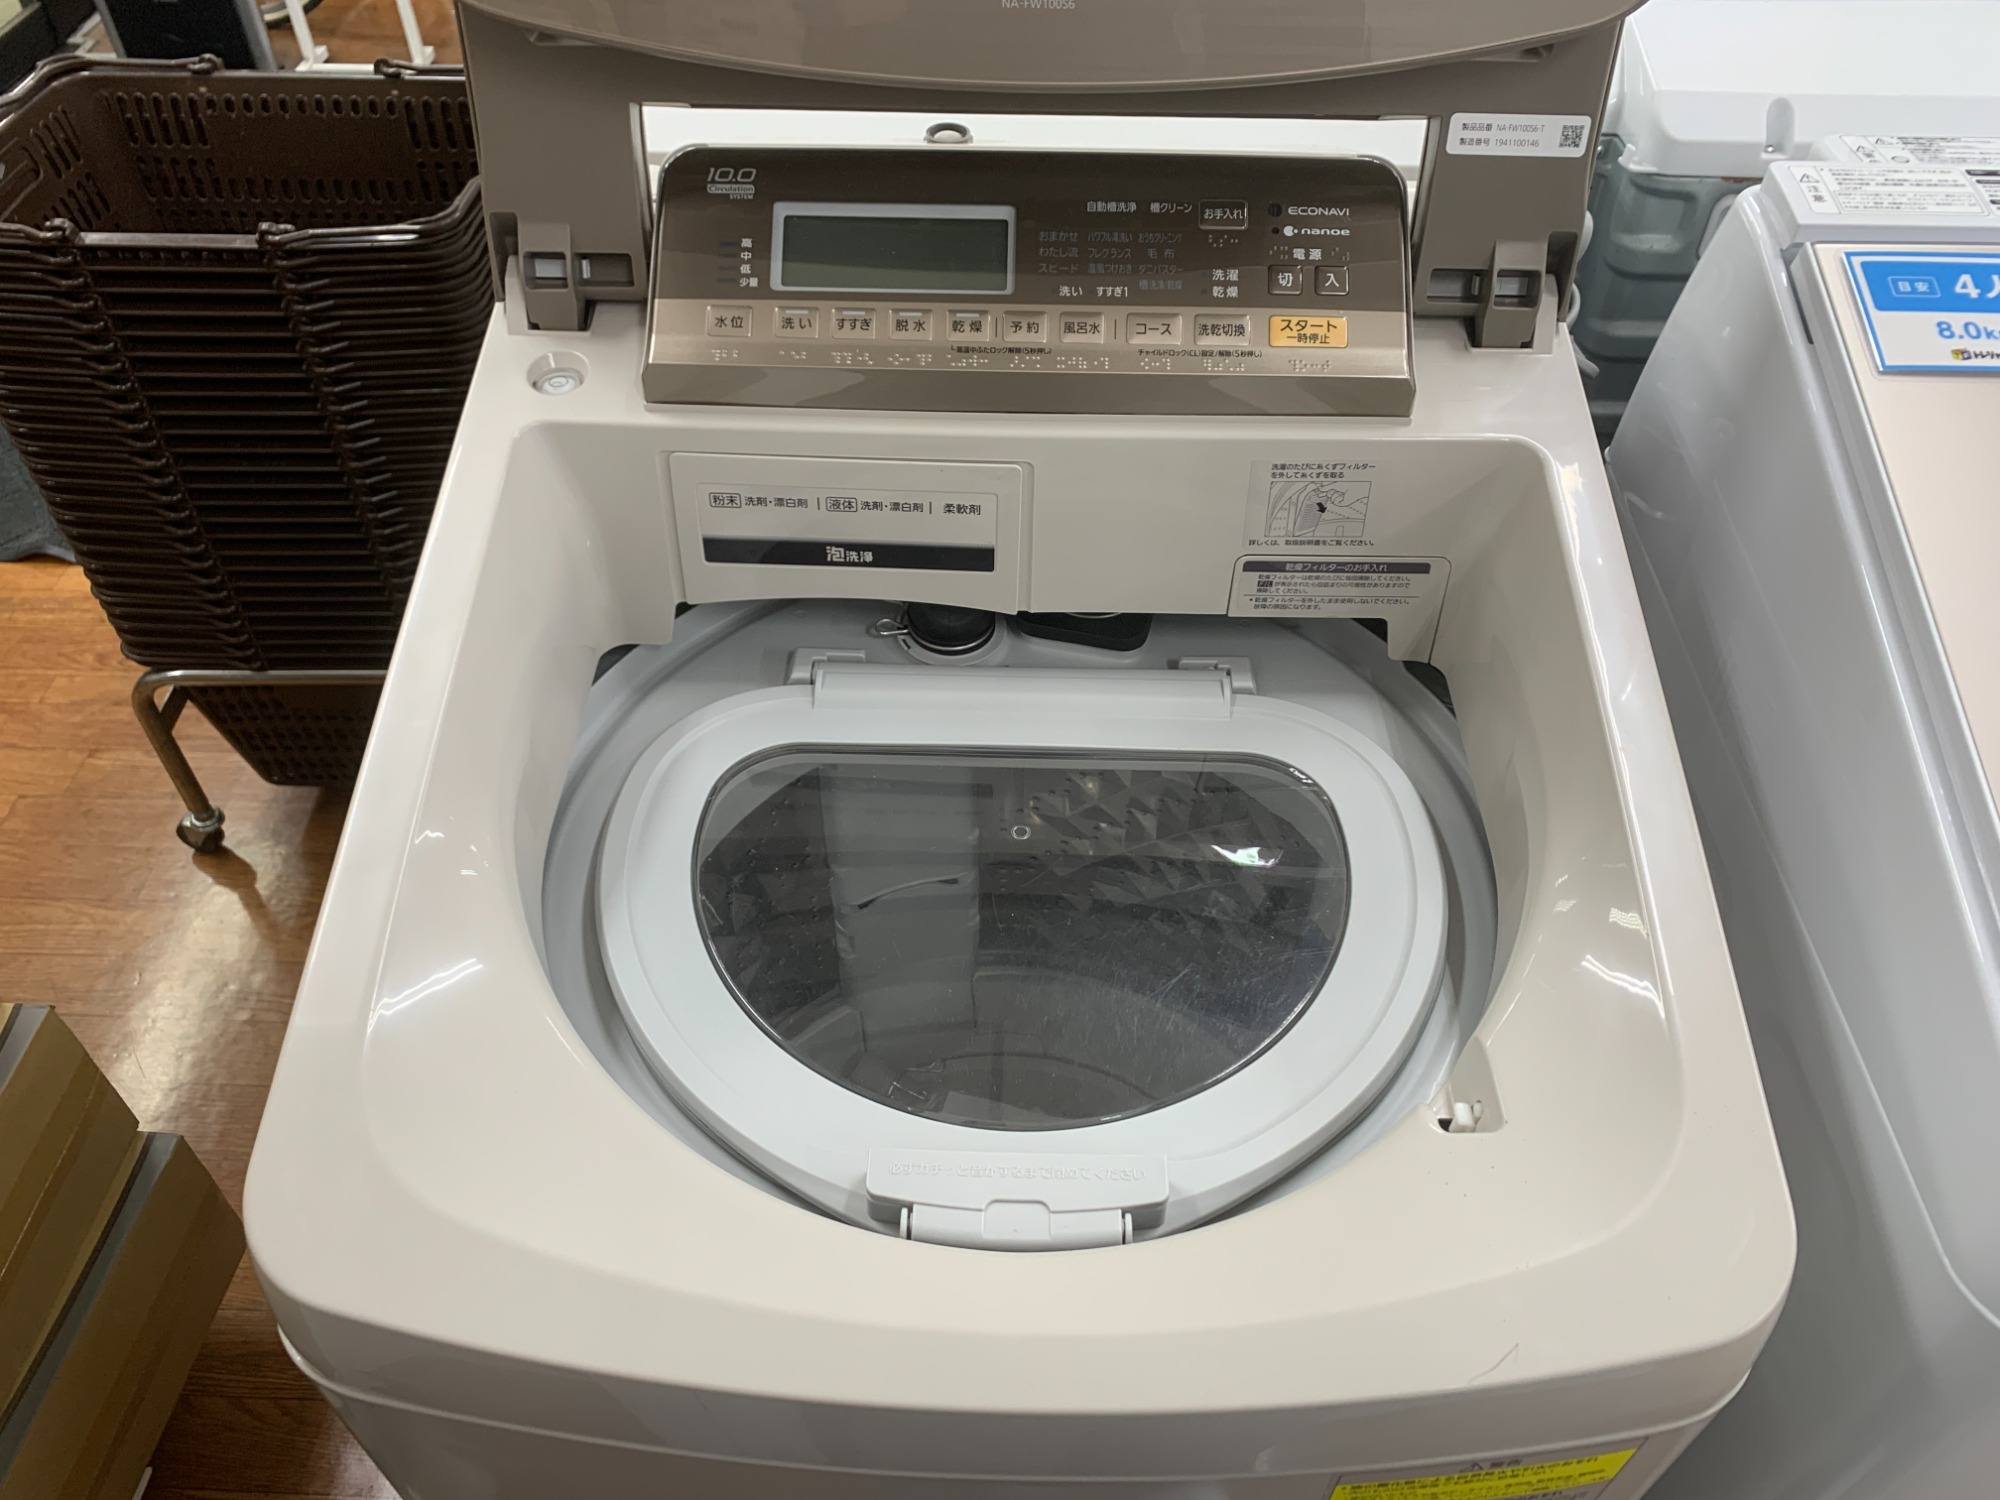 Panasonic(パナソニック)より10kgの全自動洗濯機 NA-FW100S6が入荷致し